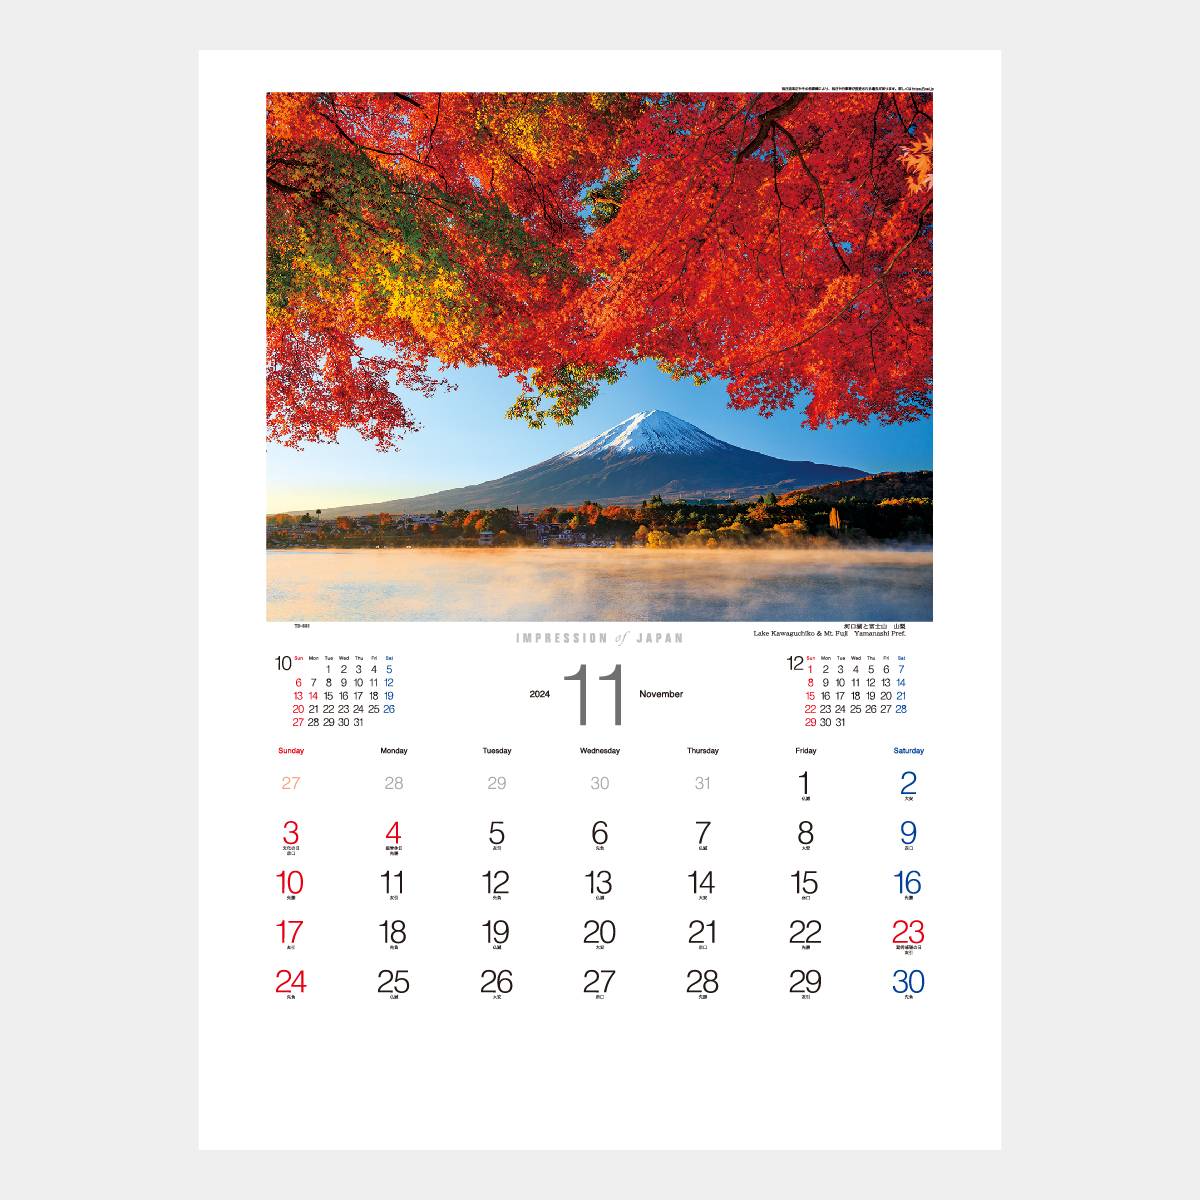 TD-631 インプレッション・オブ・ジャパン 2023年版の名入れカレンダーを格安で販売｜名入れカレンダー印刷.com